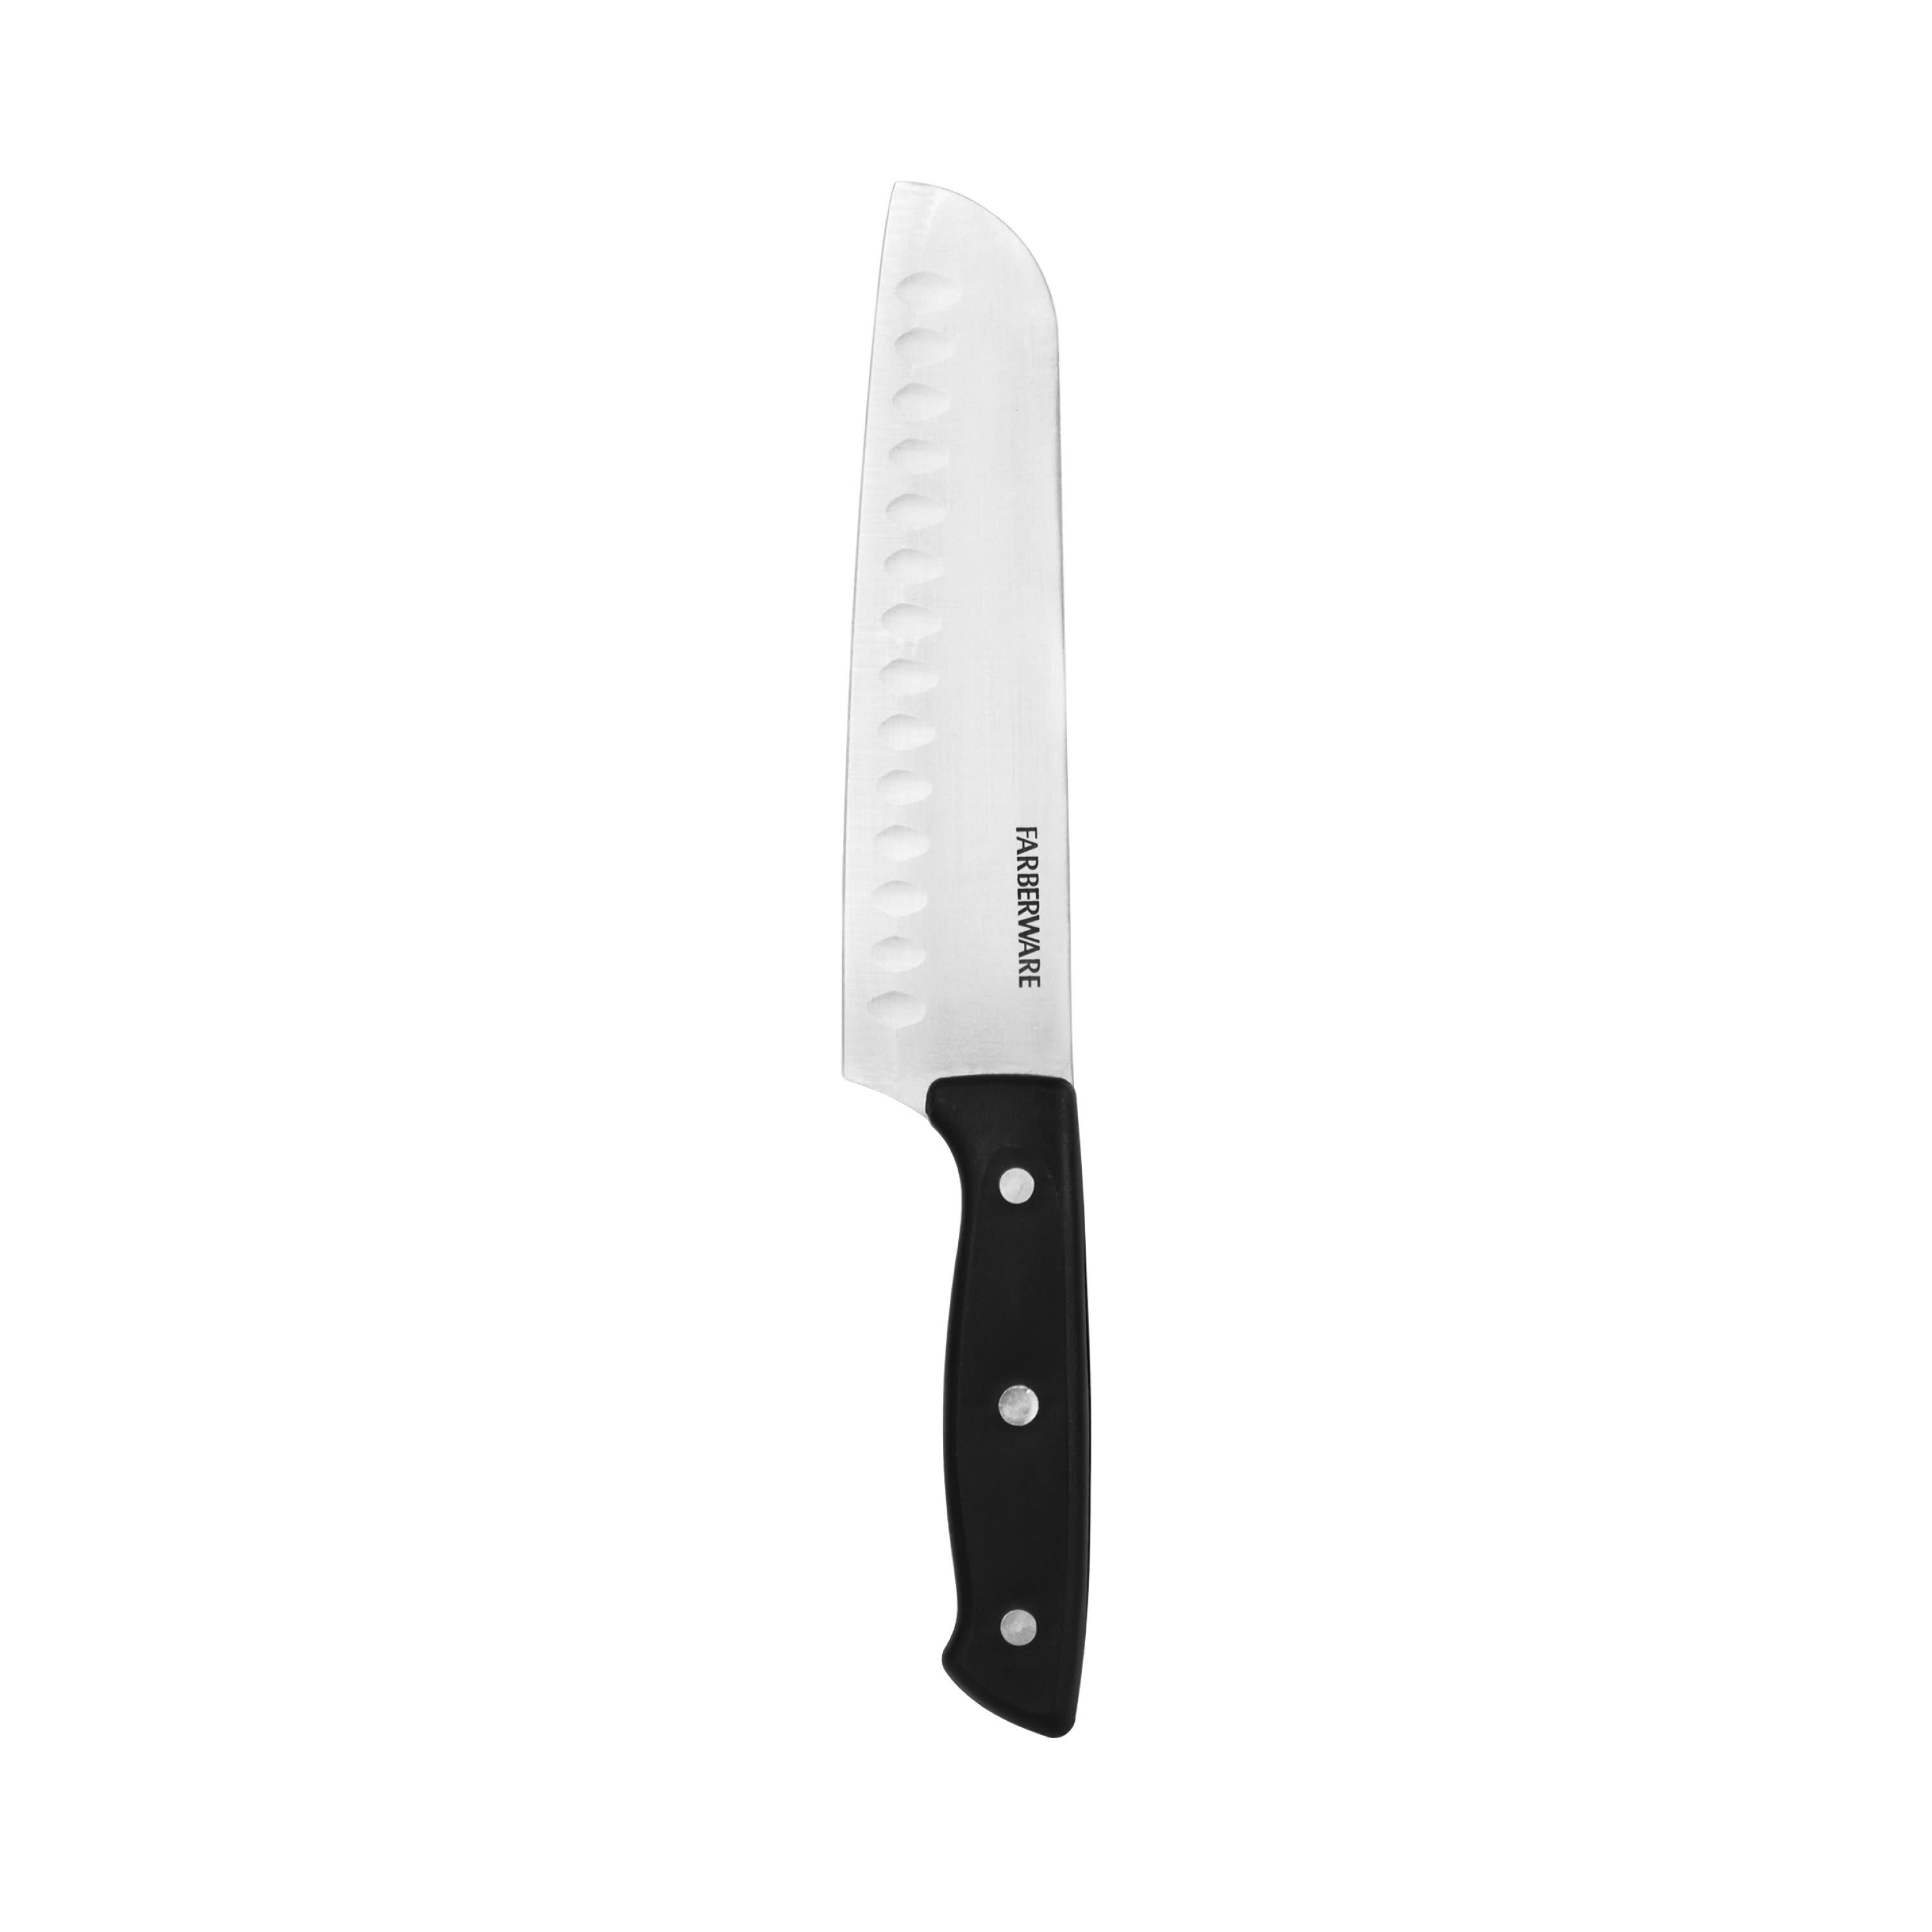 Farberware Classic -inch Full Tang Triple Riveted Santoku Knife with Black Handle - image 1 of 9